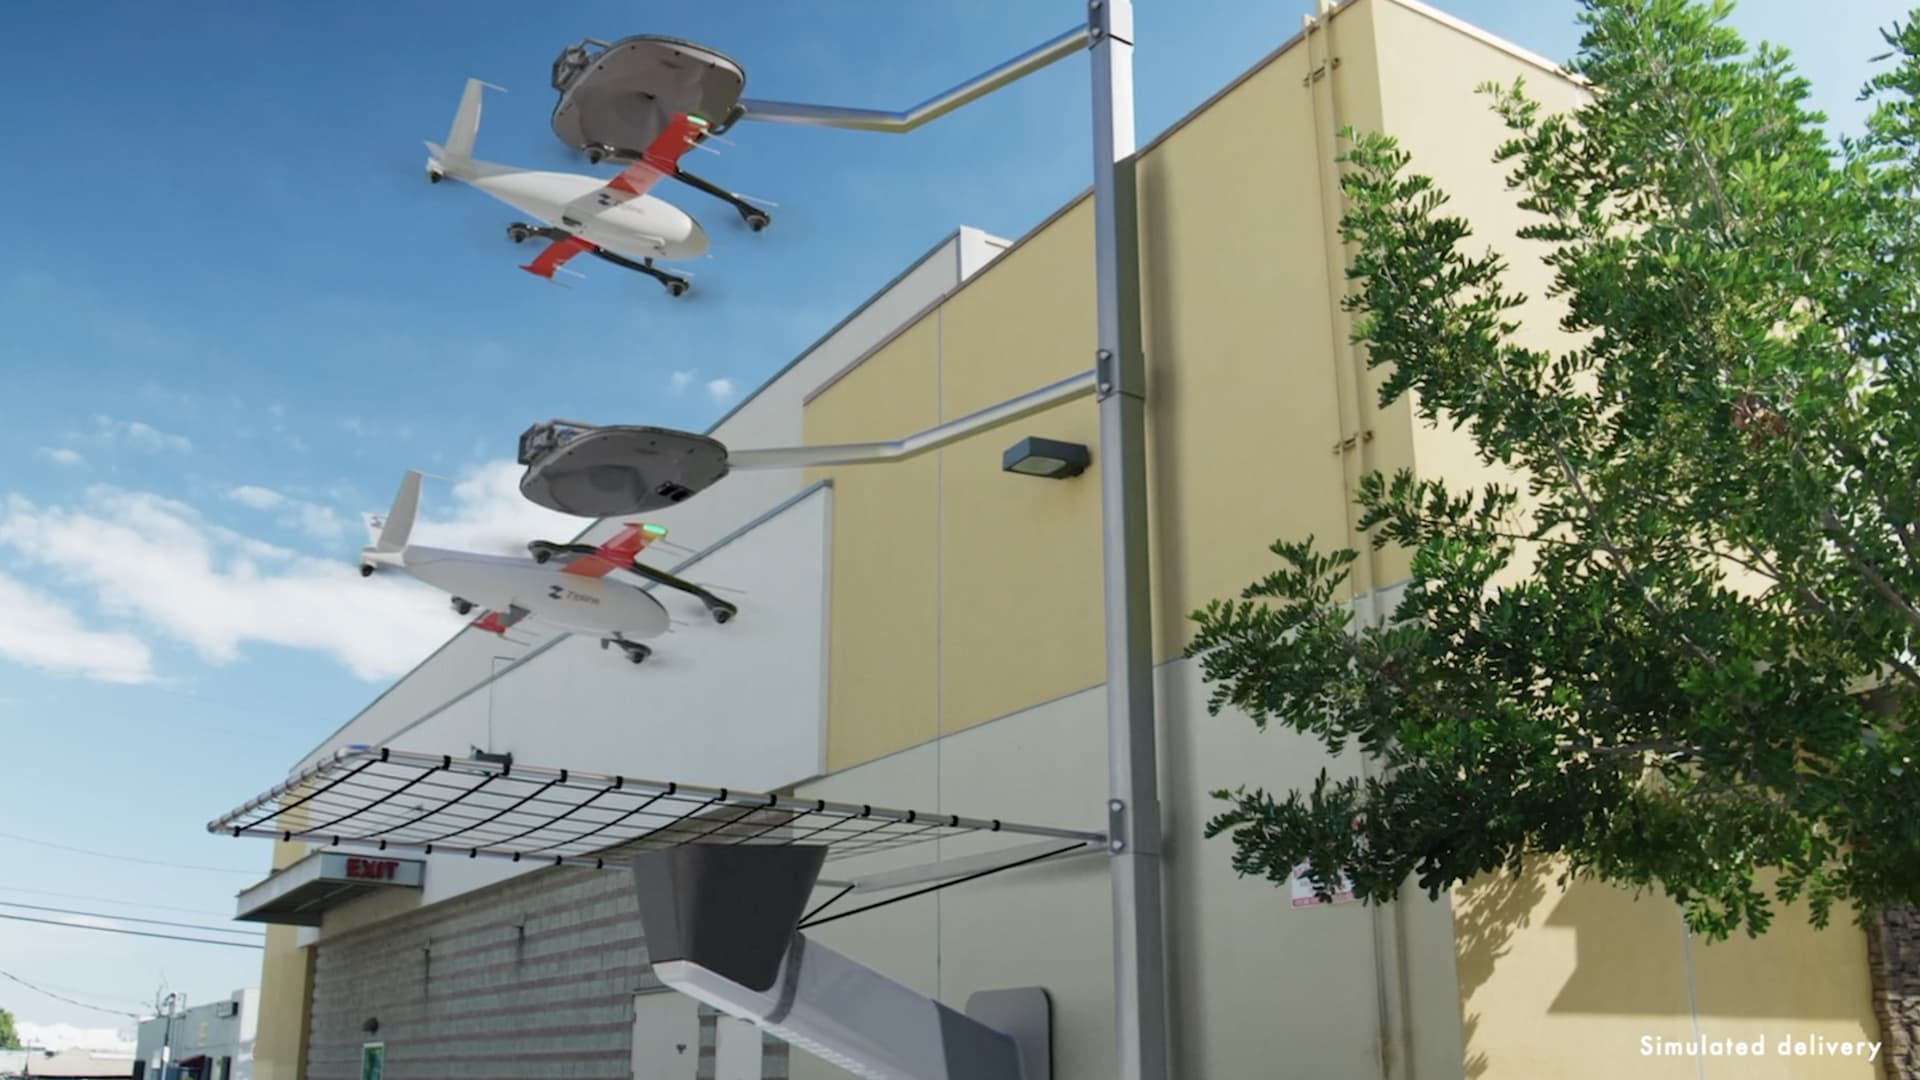 Drone maker Zipline adds vitamins, pizzas and prescriptions to cargo